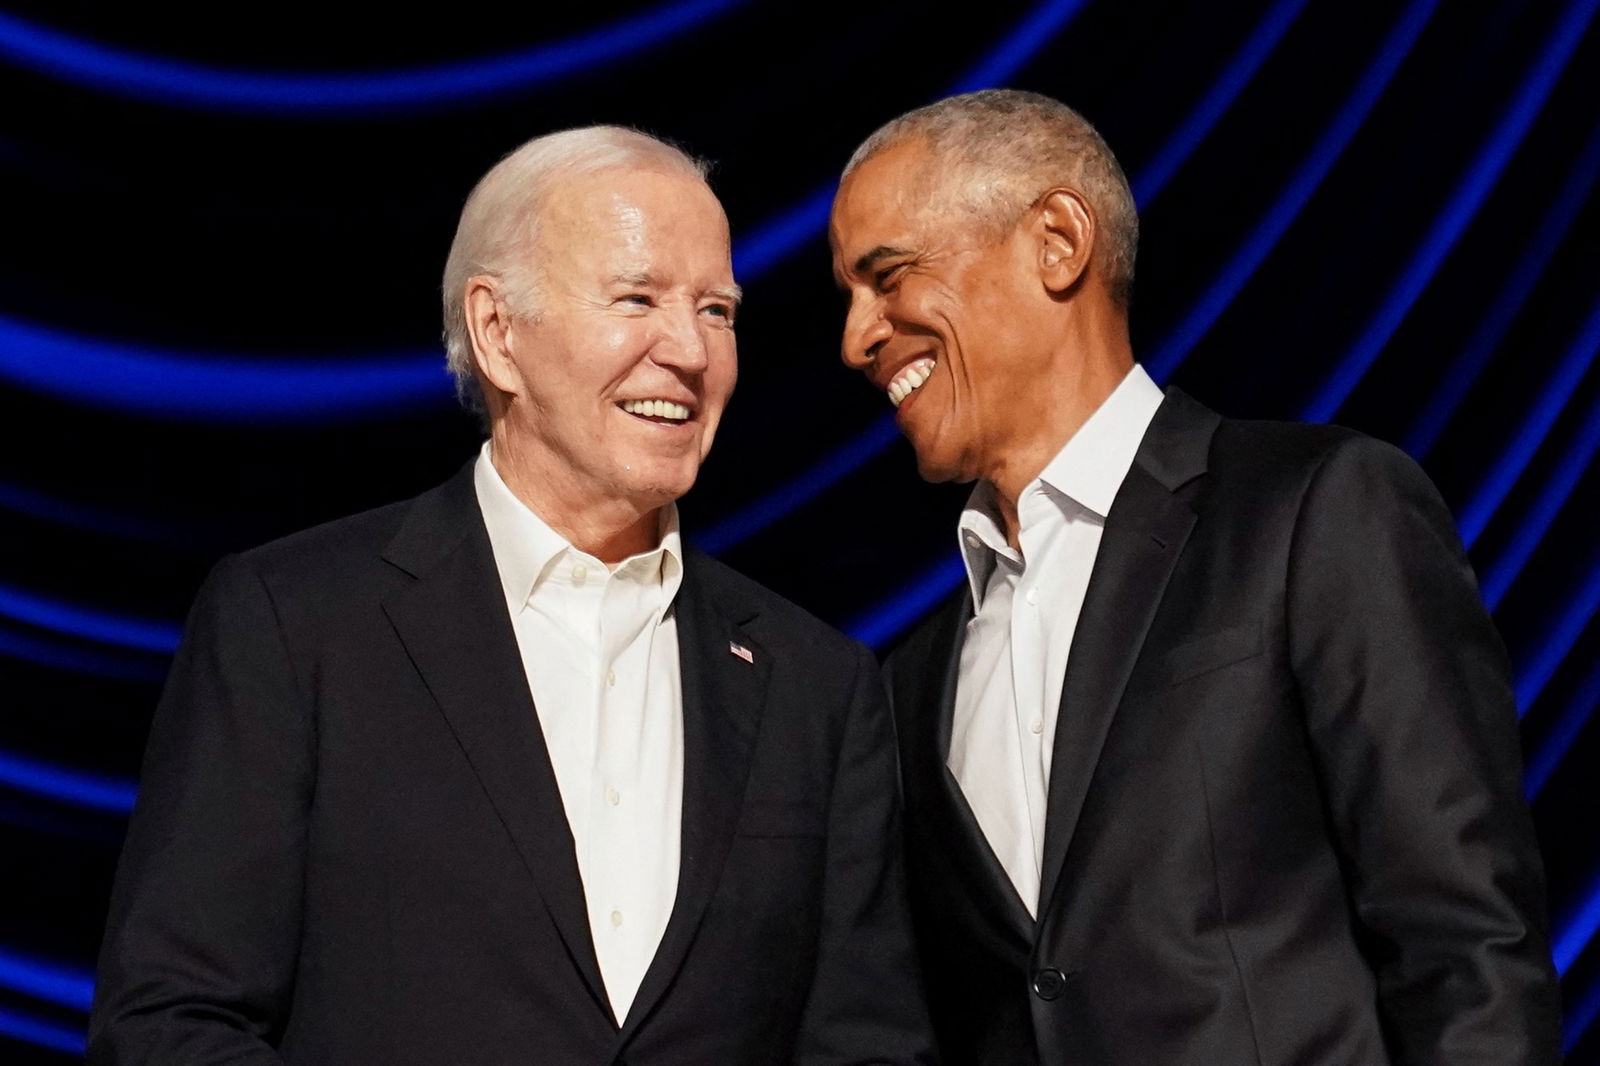 Obama smiles at Biden on stage